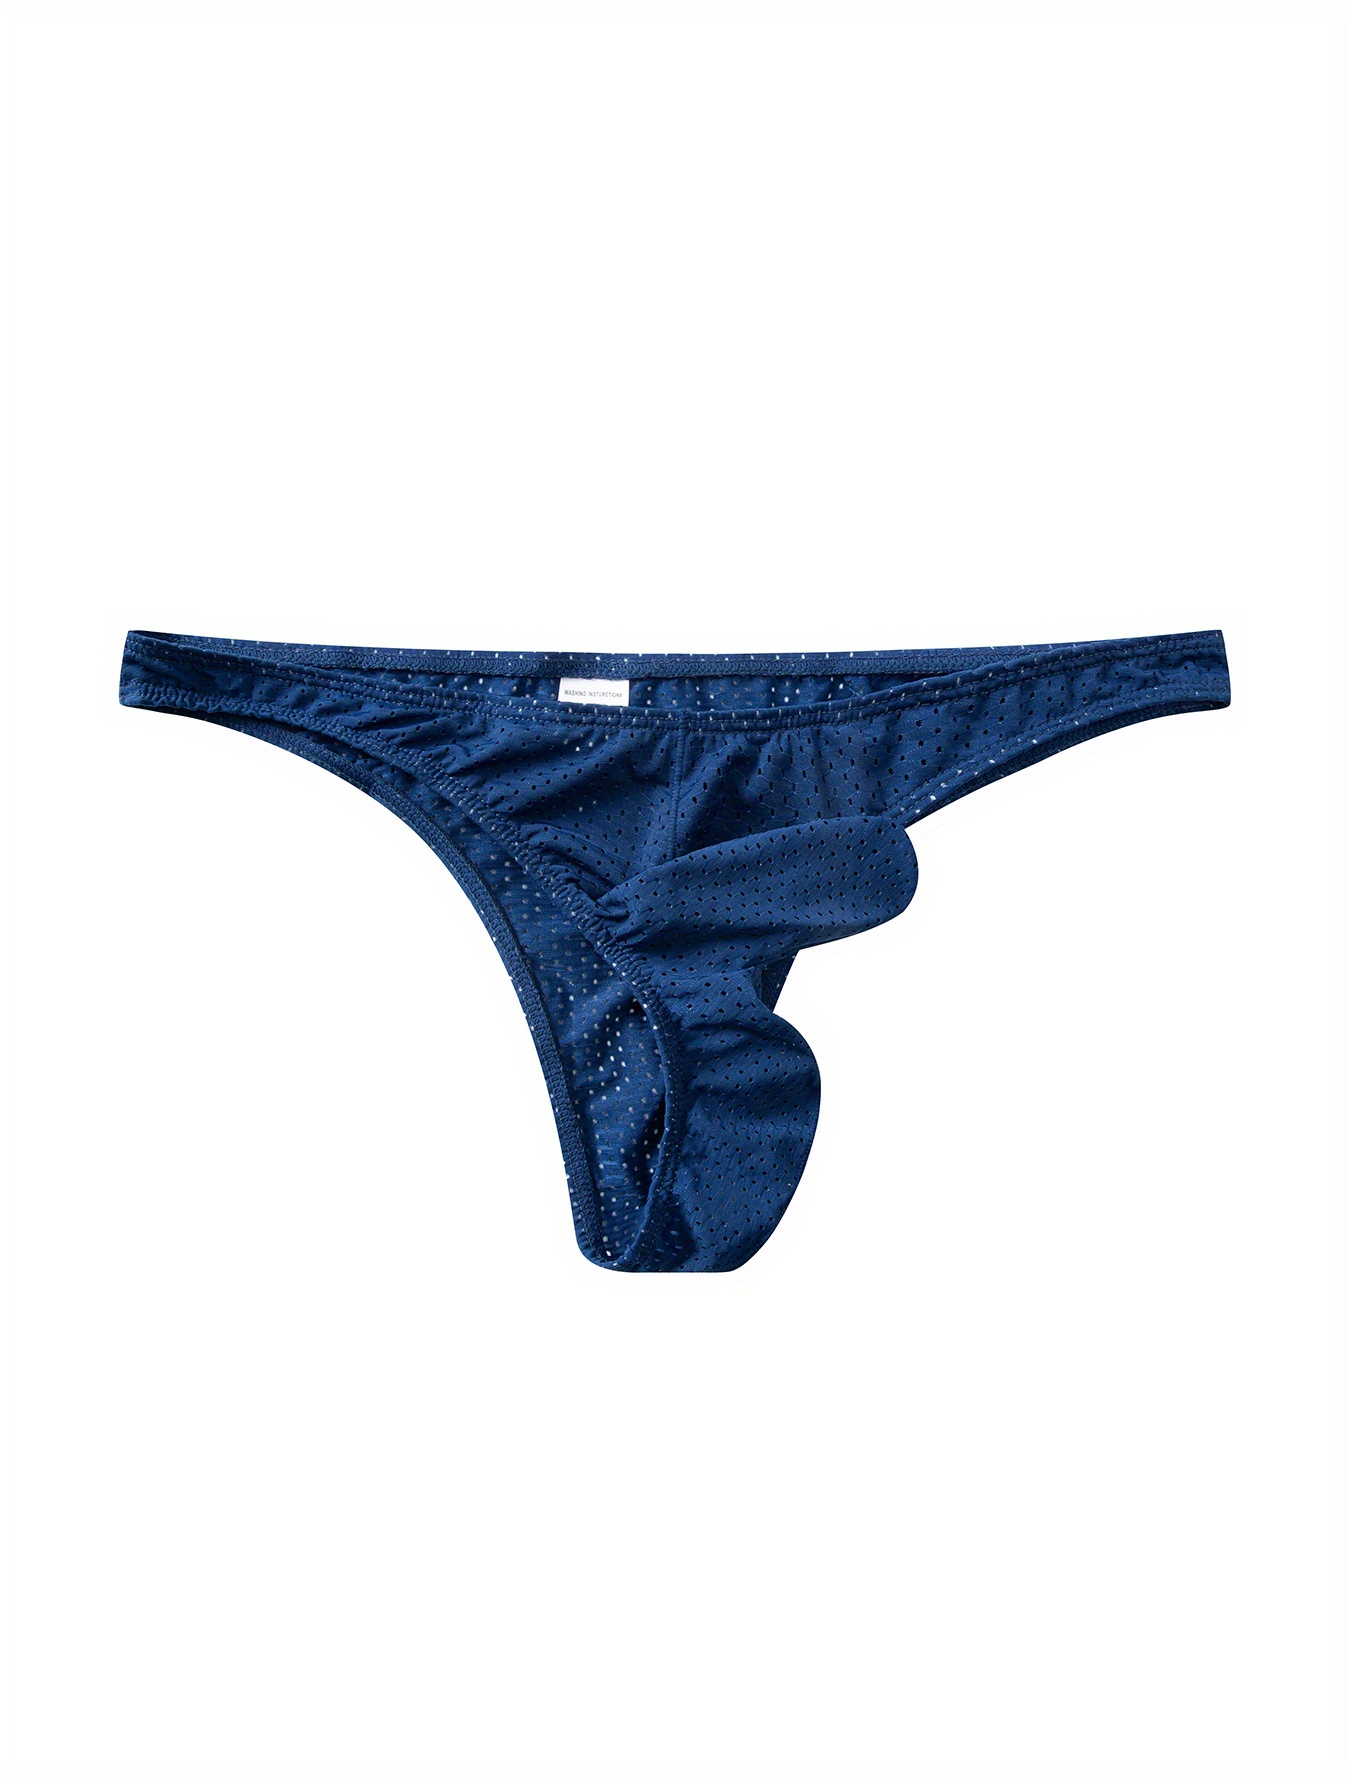 Men's Briefs Underwear Men's Elephant Underwear Pouch Briefs Low-Rise  Elephant Bulge Pouch Underwear Elephant Trunk Underpants